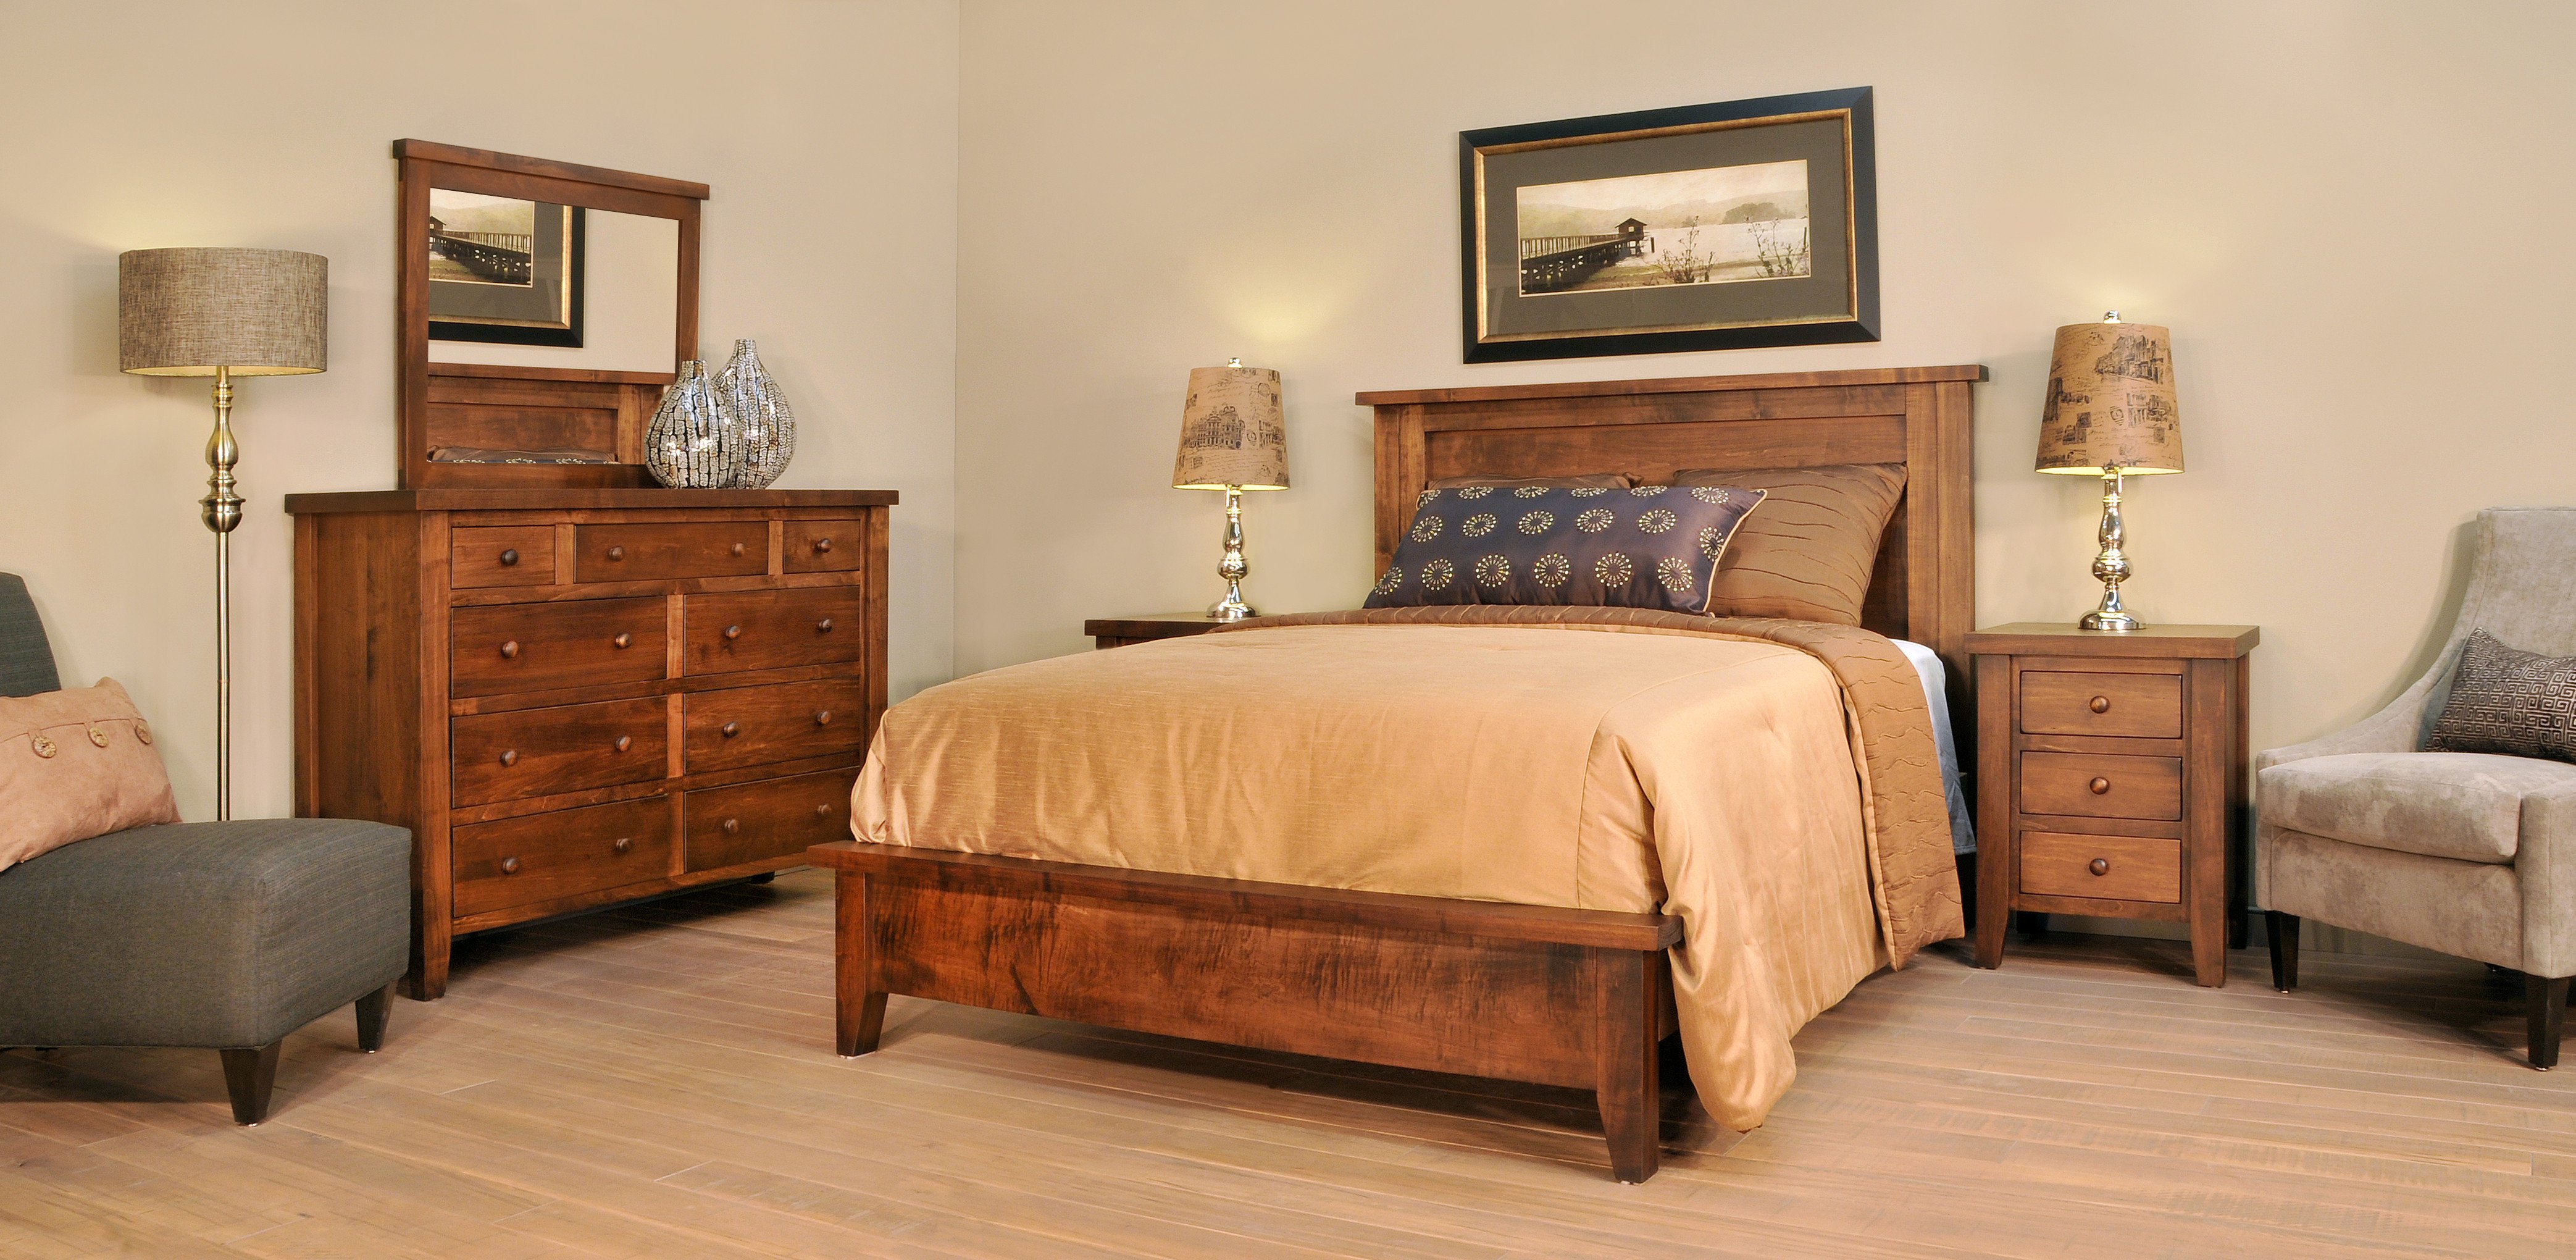 bedroom design with wooden furniture